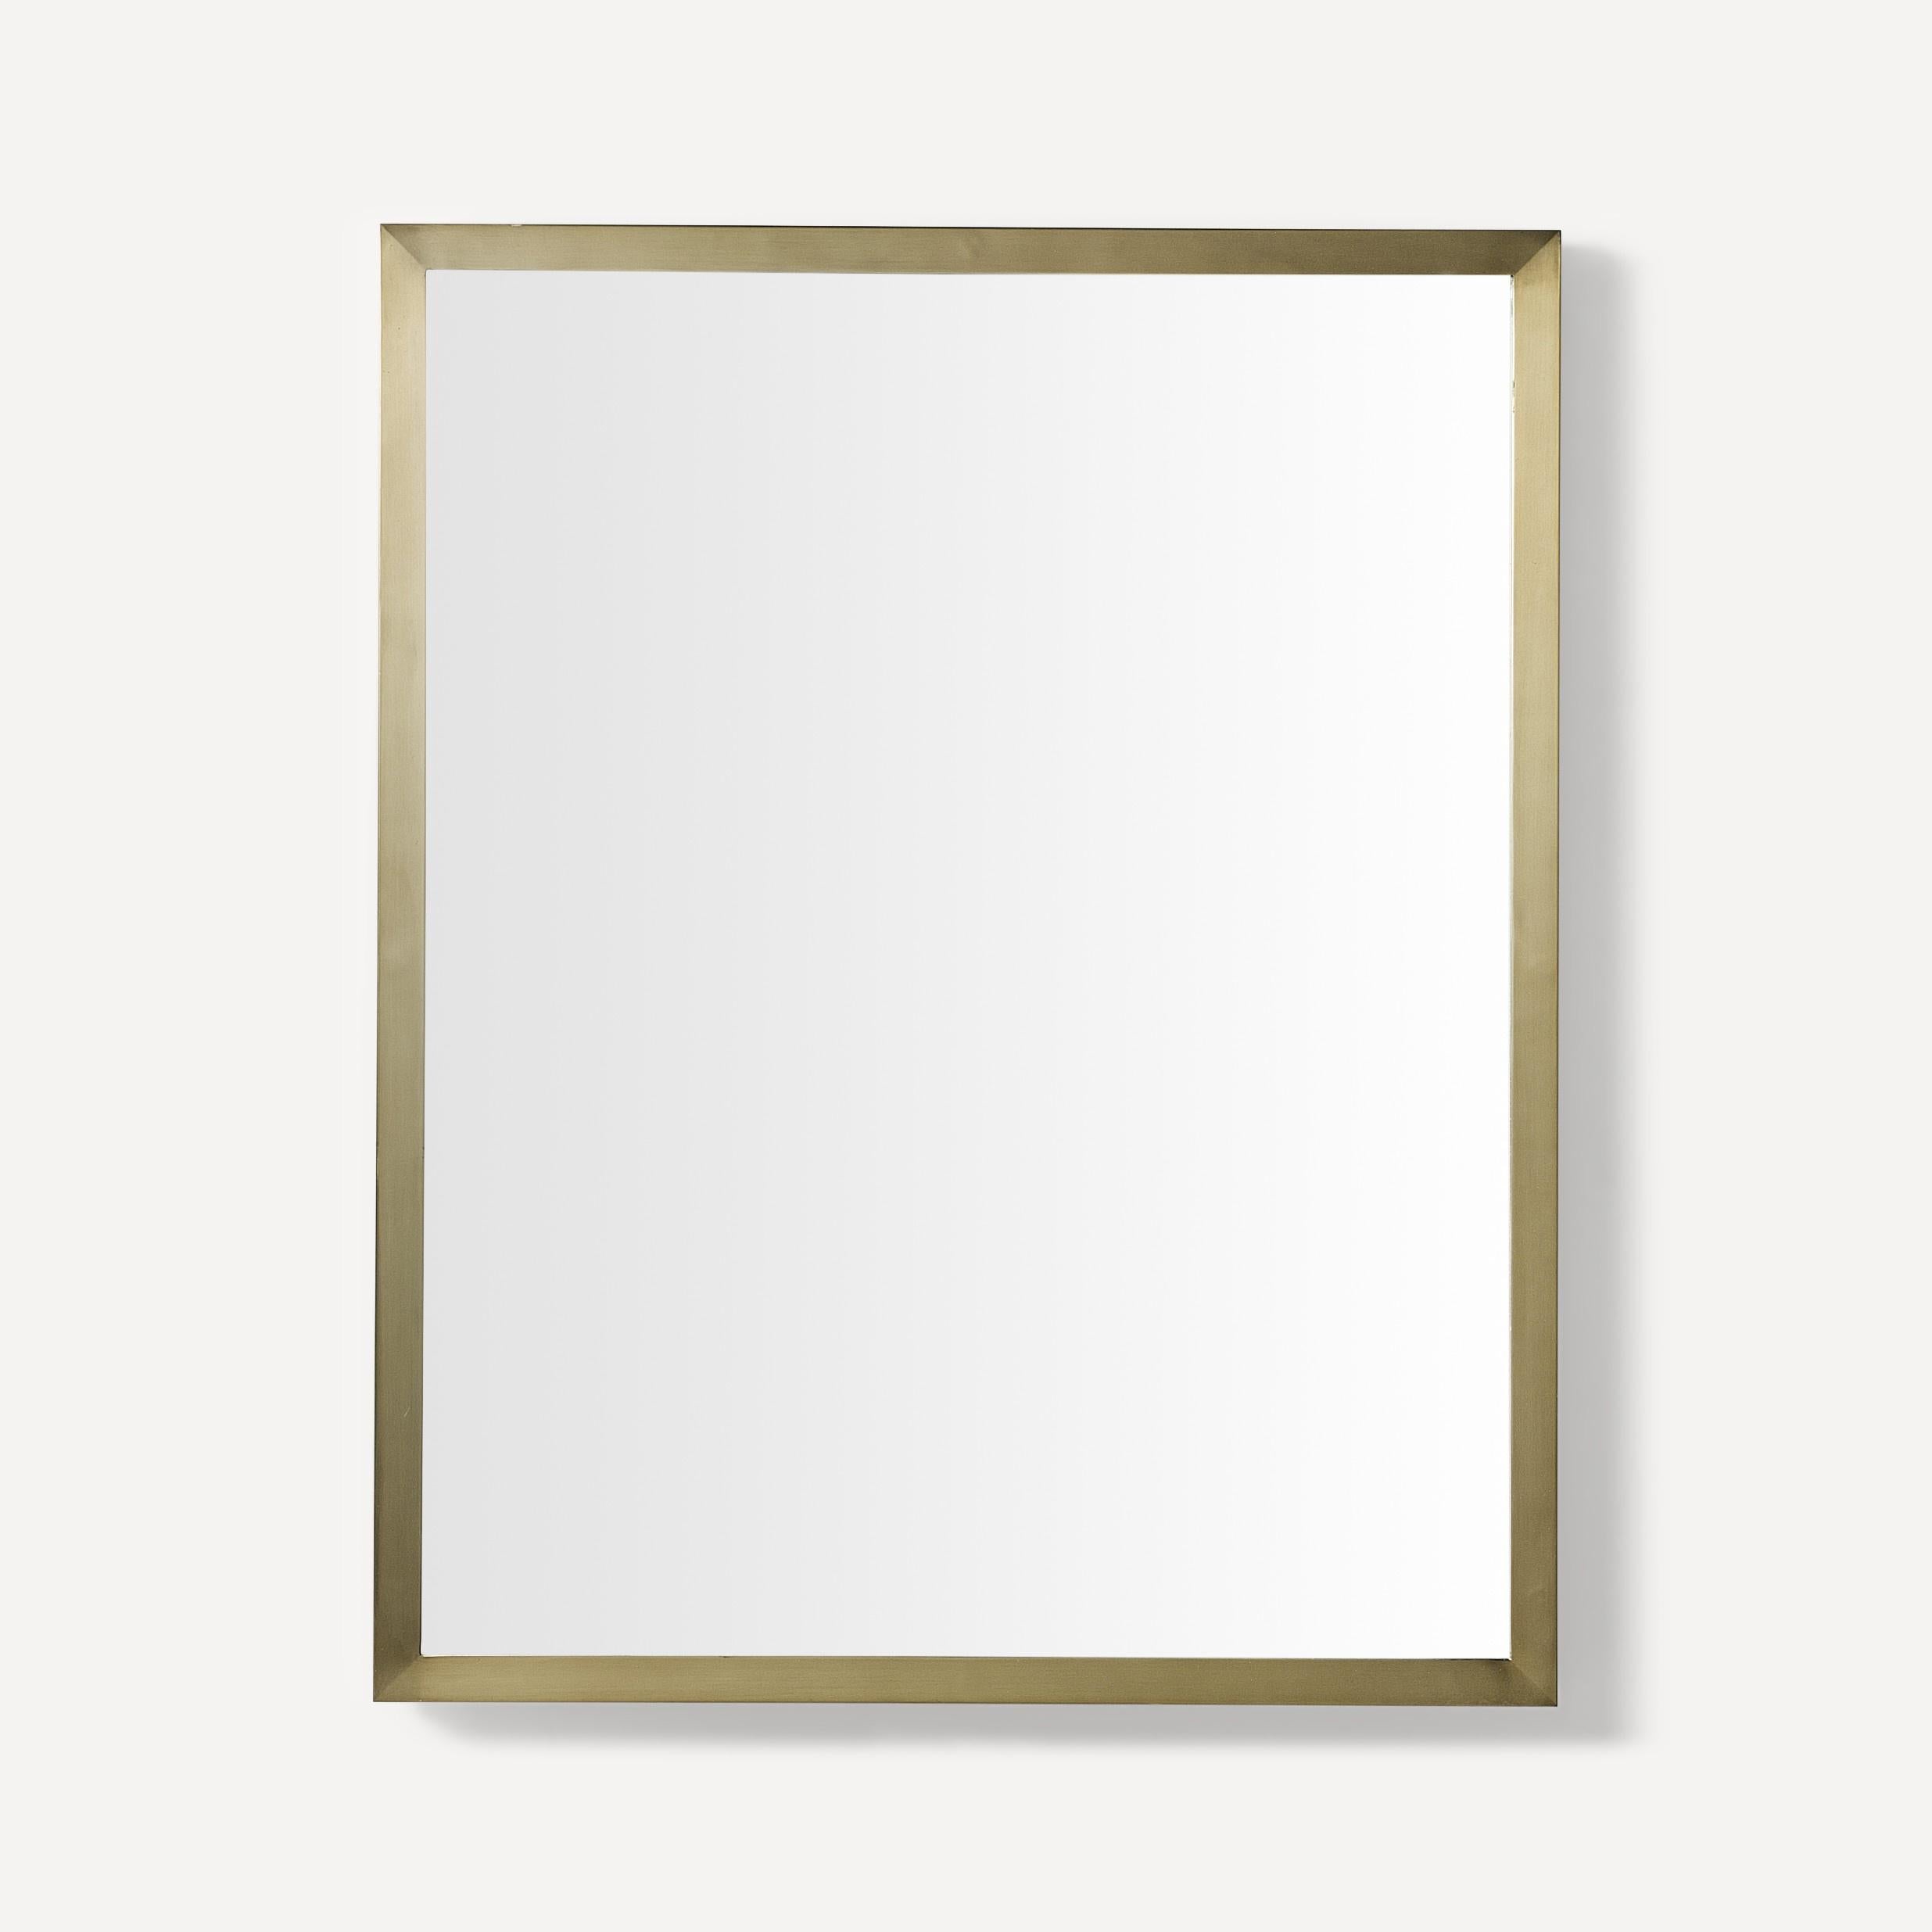 Robern Thin Framed Metal Mirror, 24"x 30"x 1-3/8"